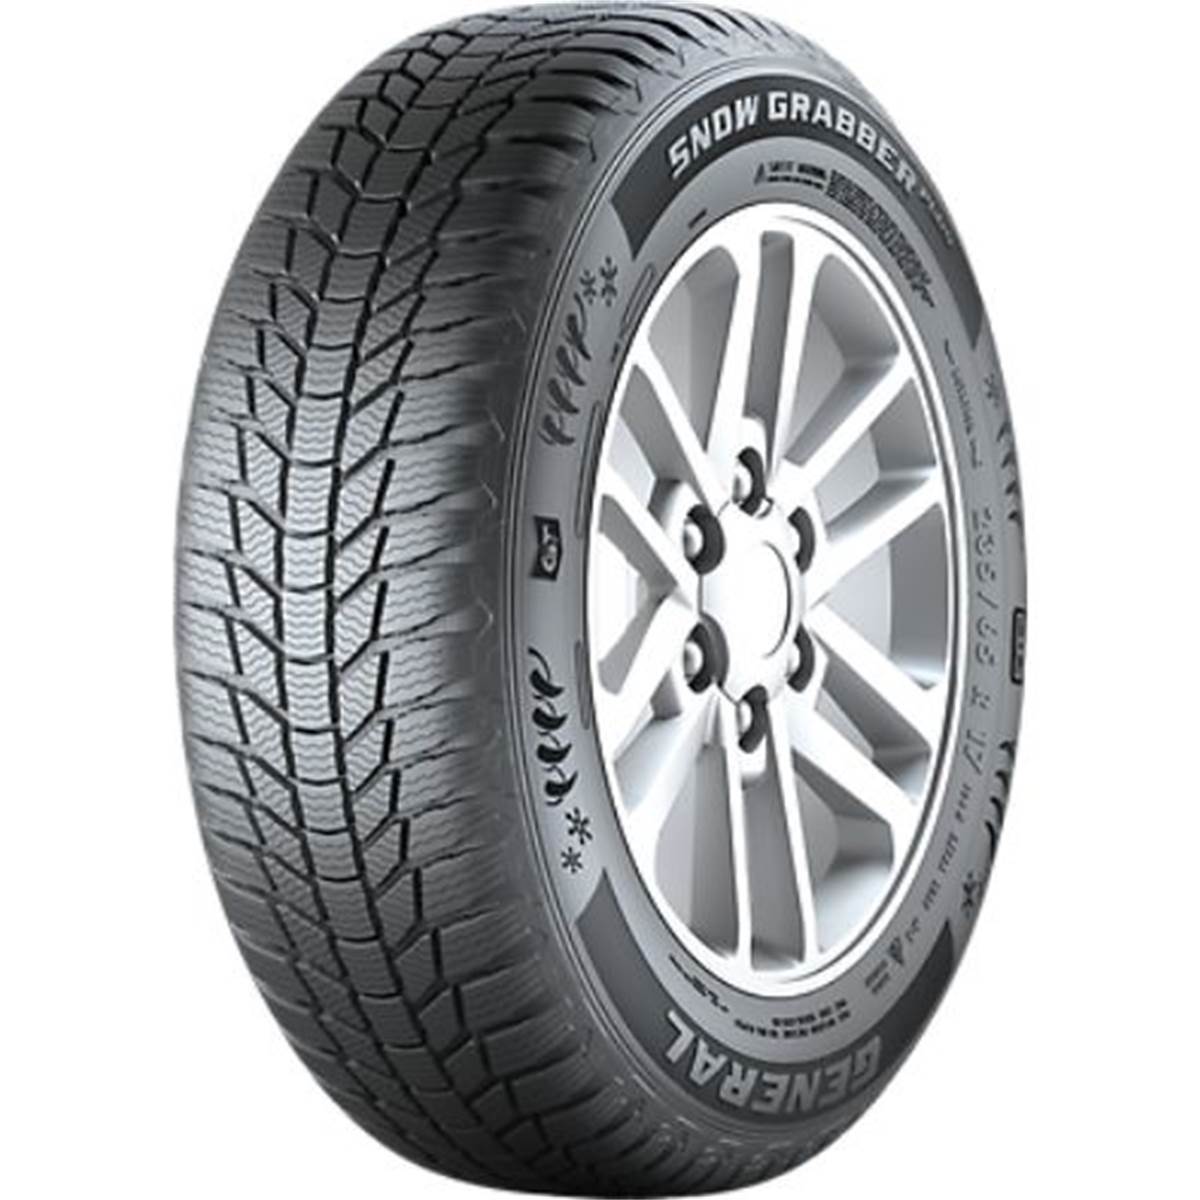 General Tire Neumático  Snow Grabber Plus 255/55R18 109H